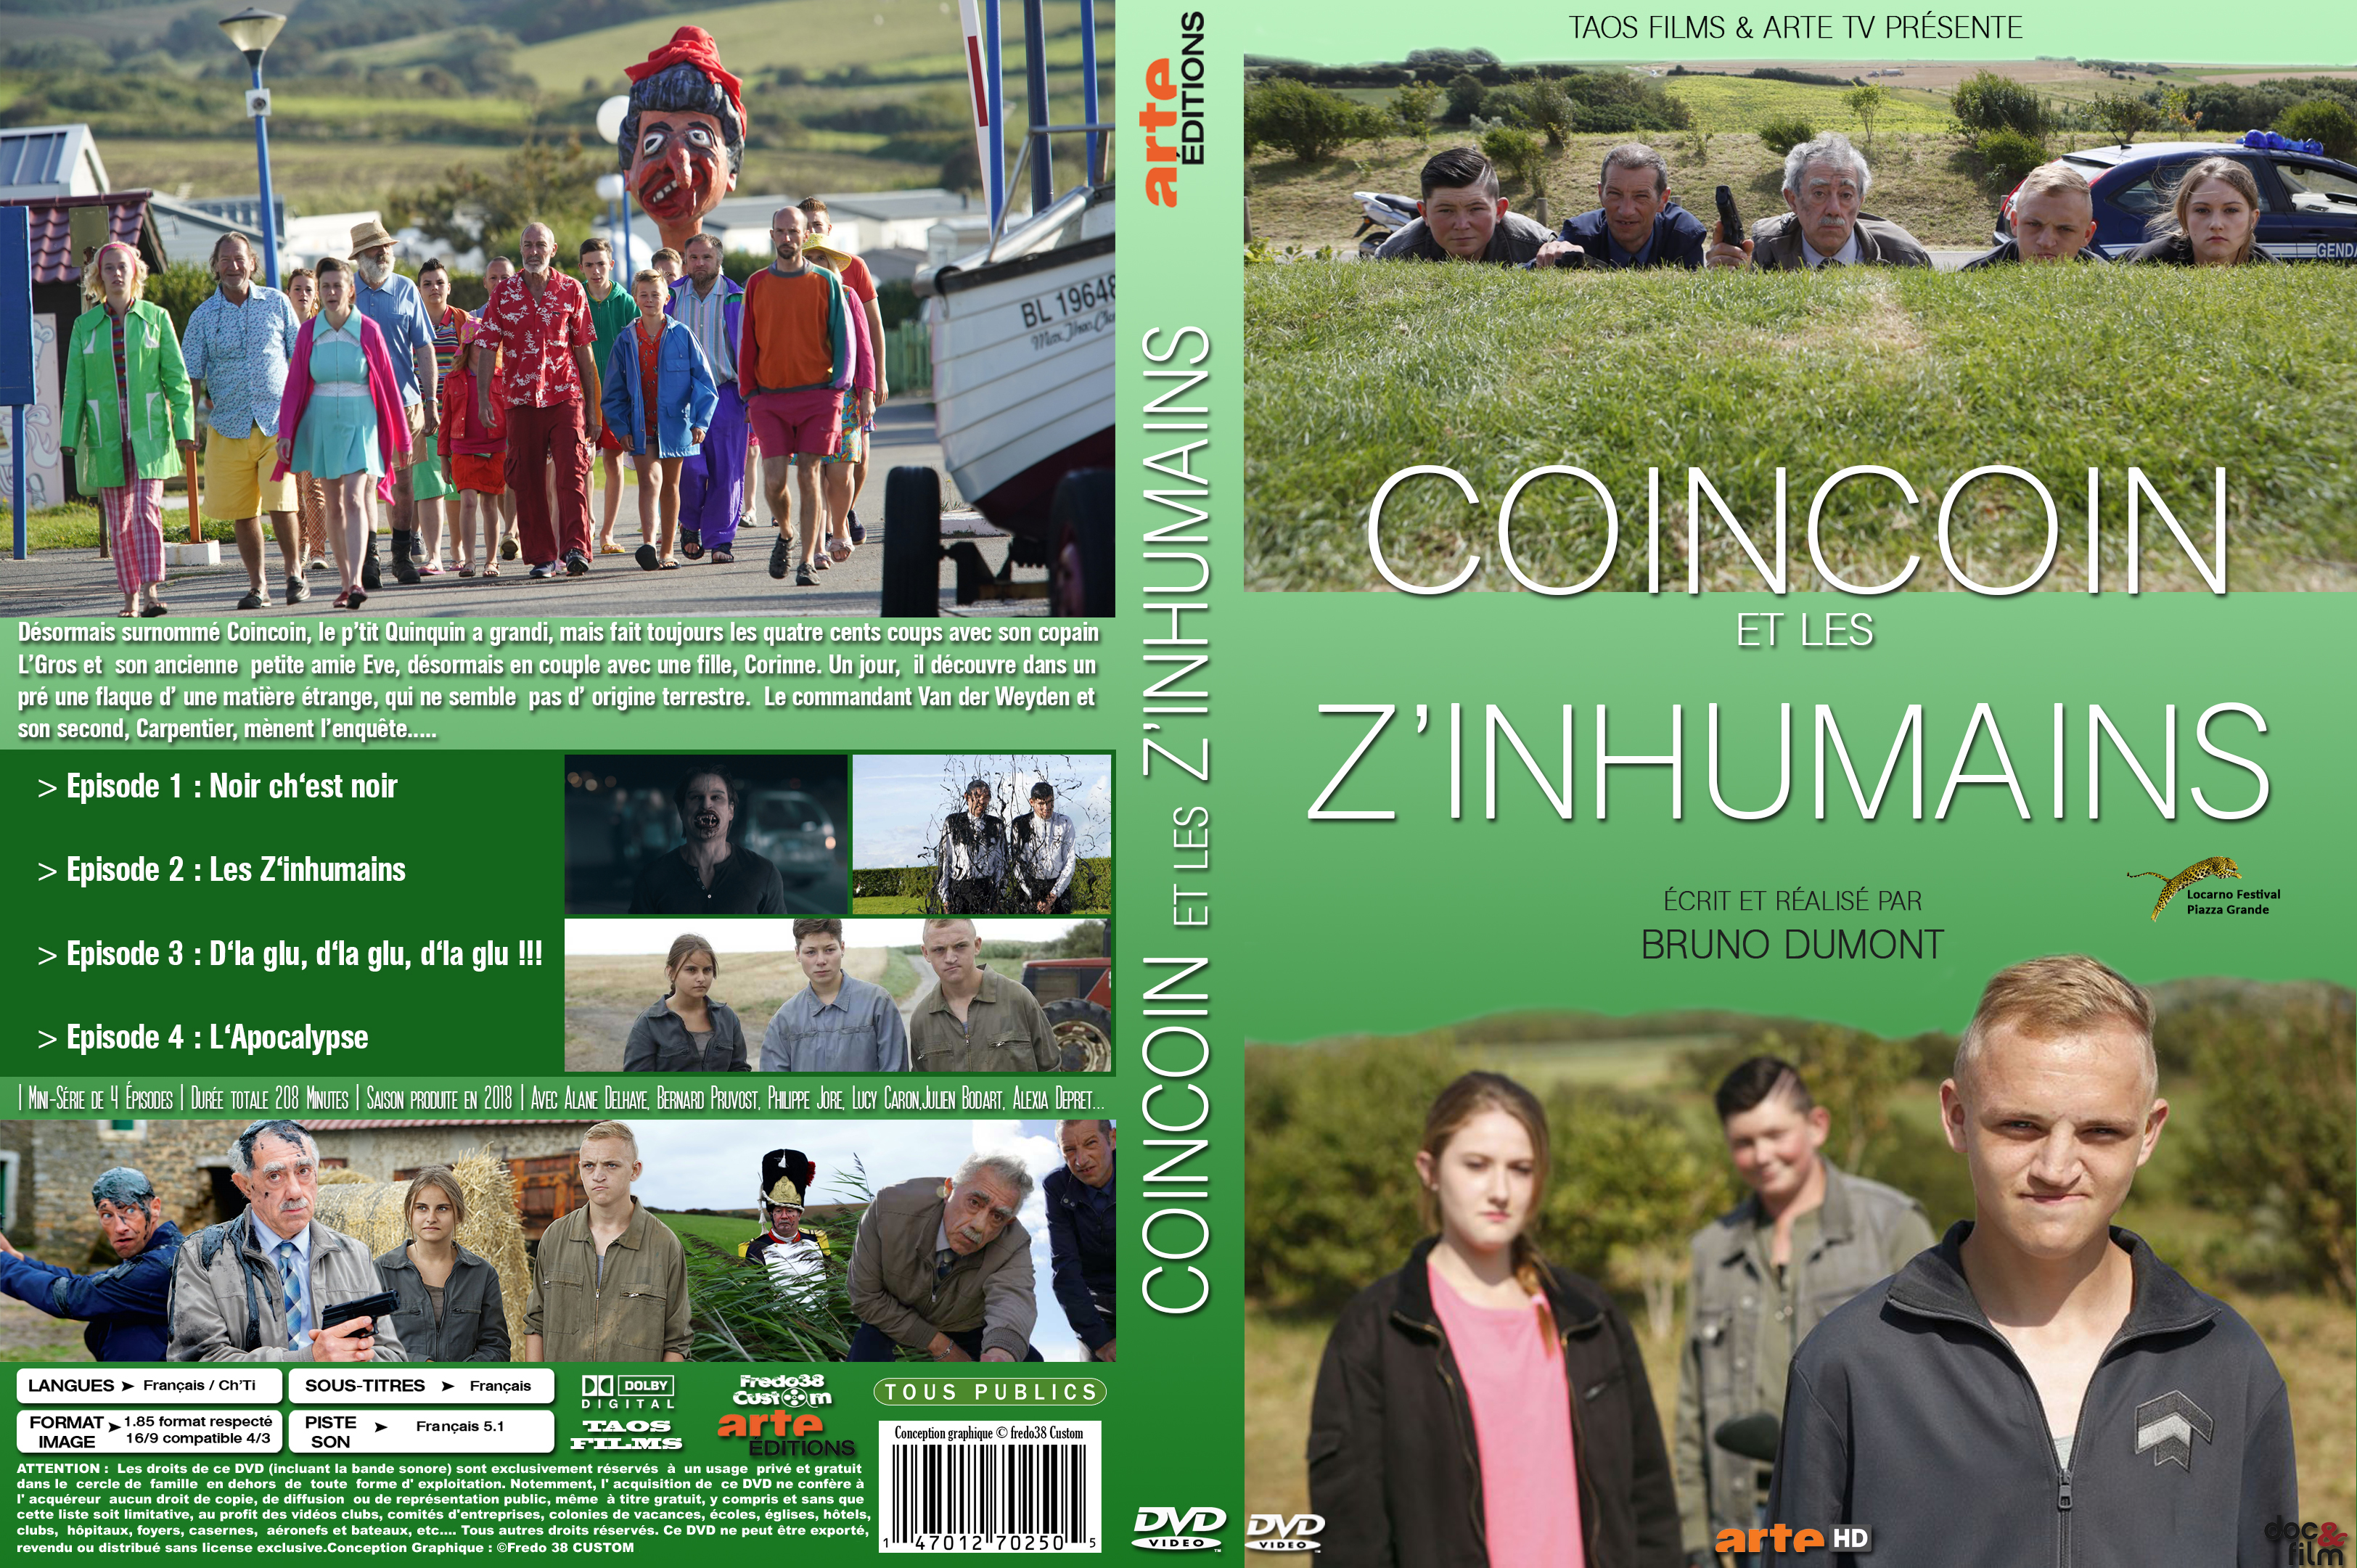 Jaquette DVD Coincoin et les Zhinhumains custom